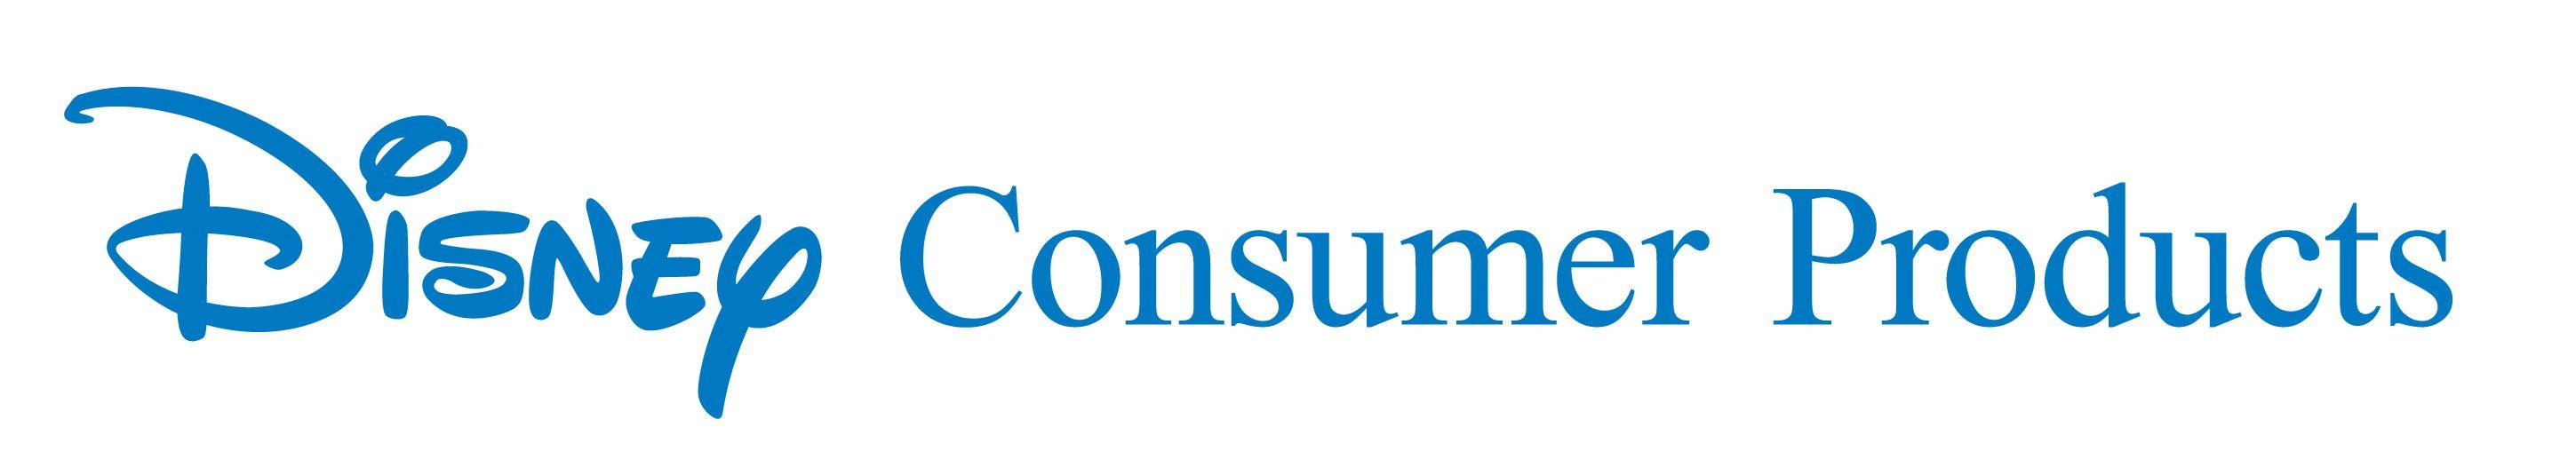 Consumer Products Logo - Disney Consumer Products | Logopedia | FANDOM powered by Wikia